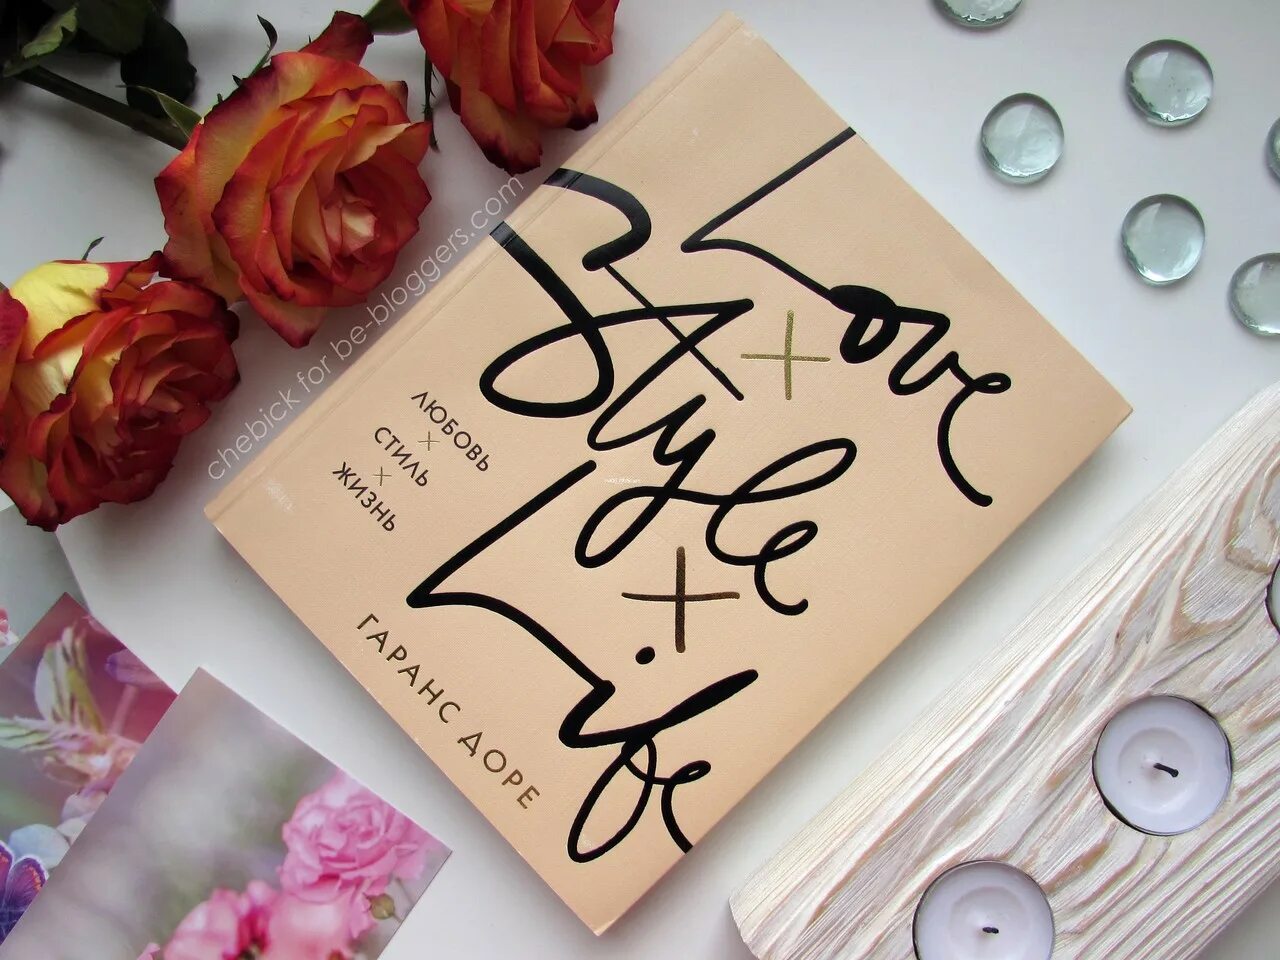 Life love work. Гаранс Дорэ. «Любовь. Стиль. Жизнь». Гаранс Доре любовь стиль жизнь. Love Style Life книга. Love стиль.